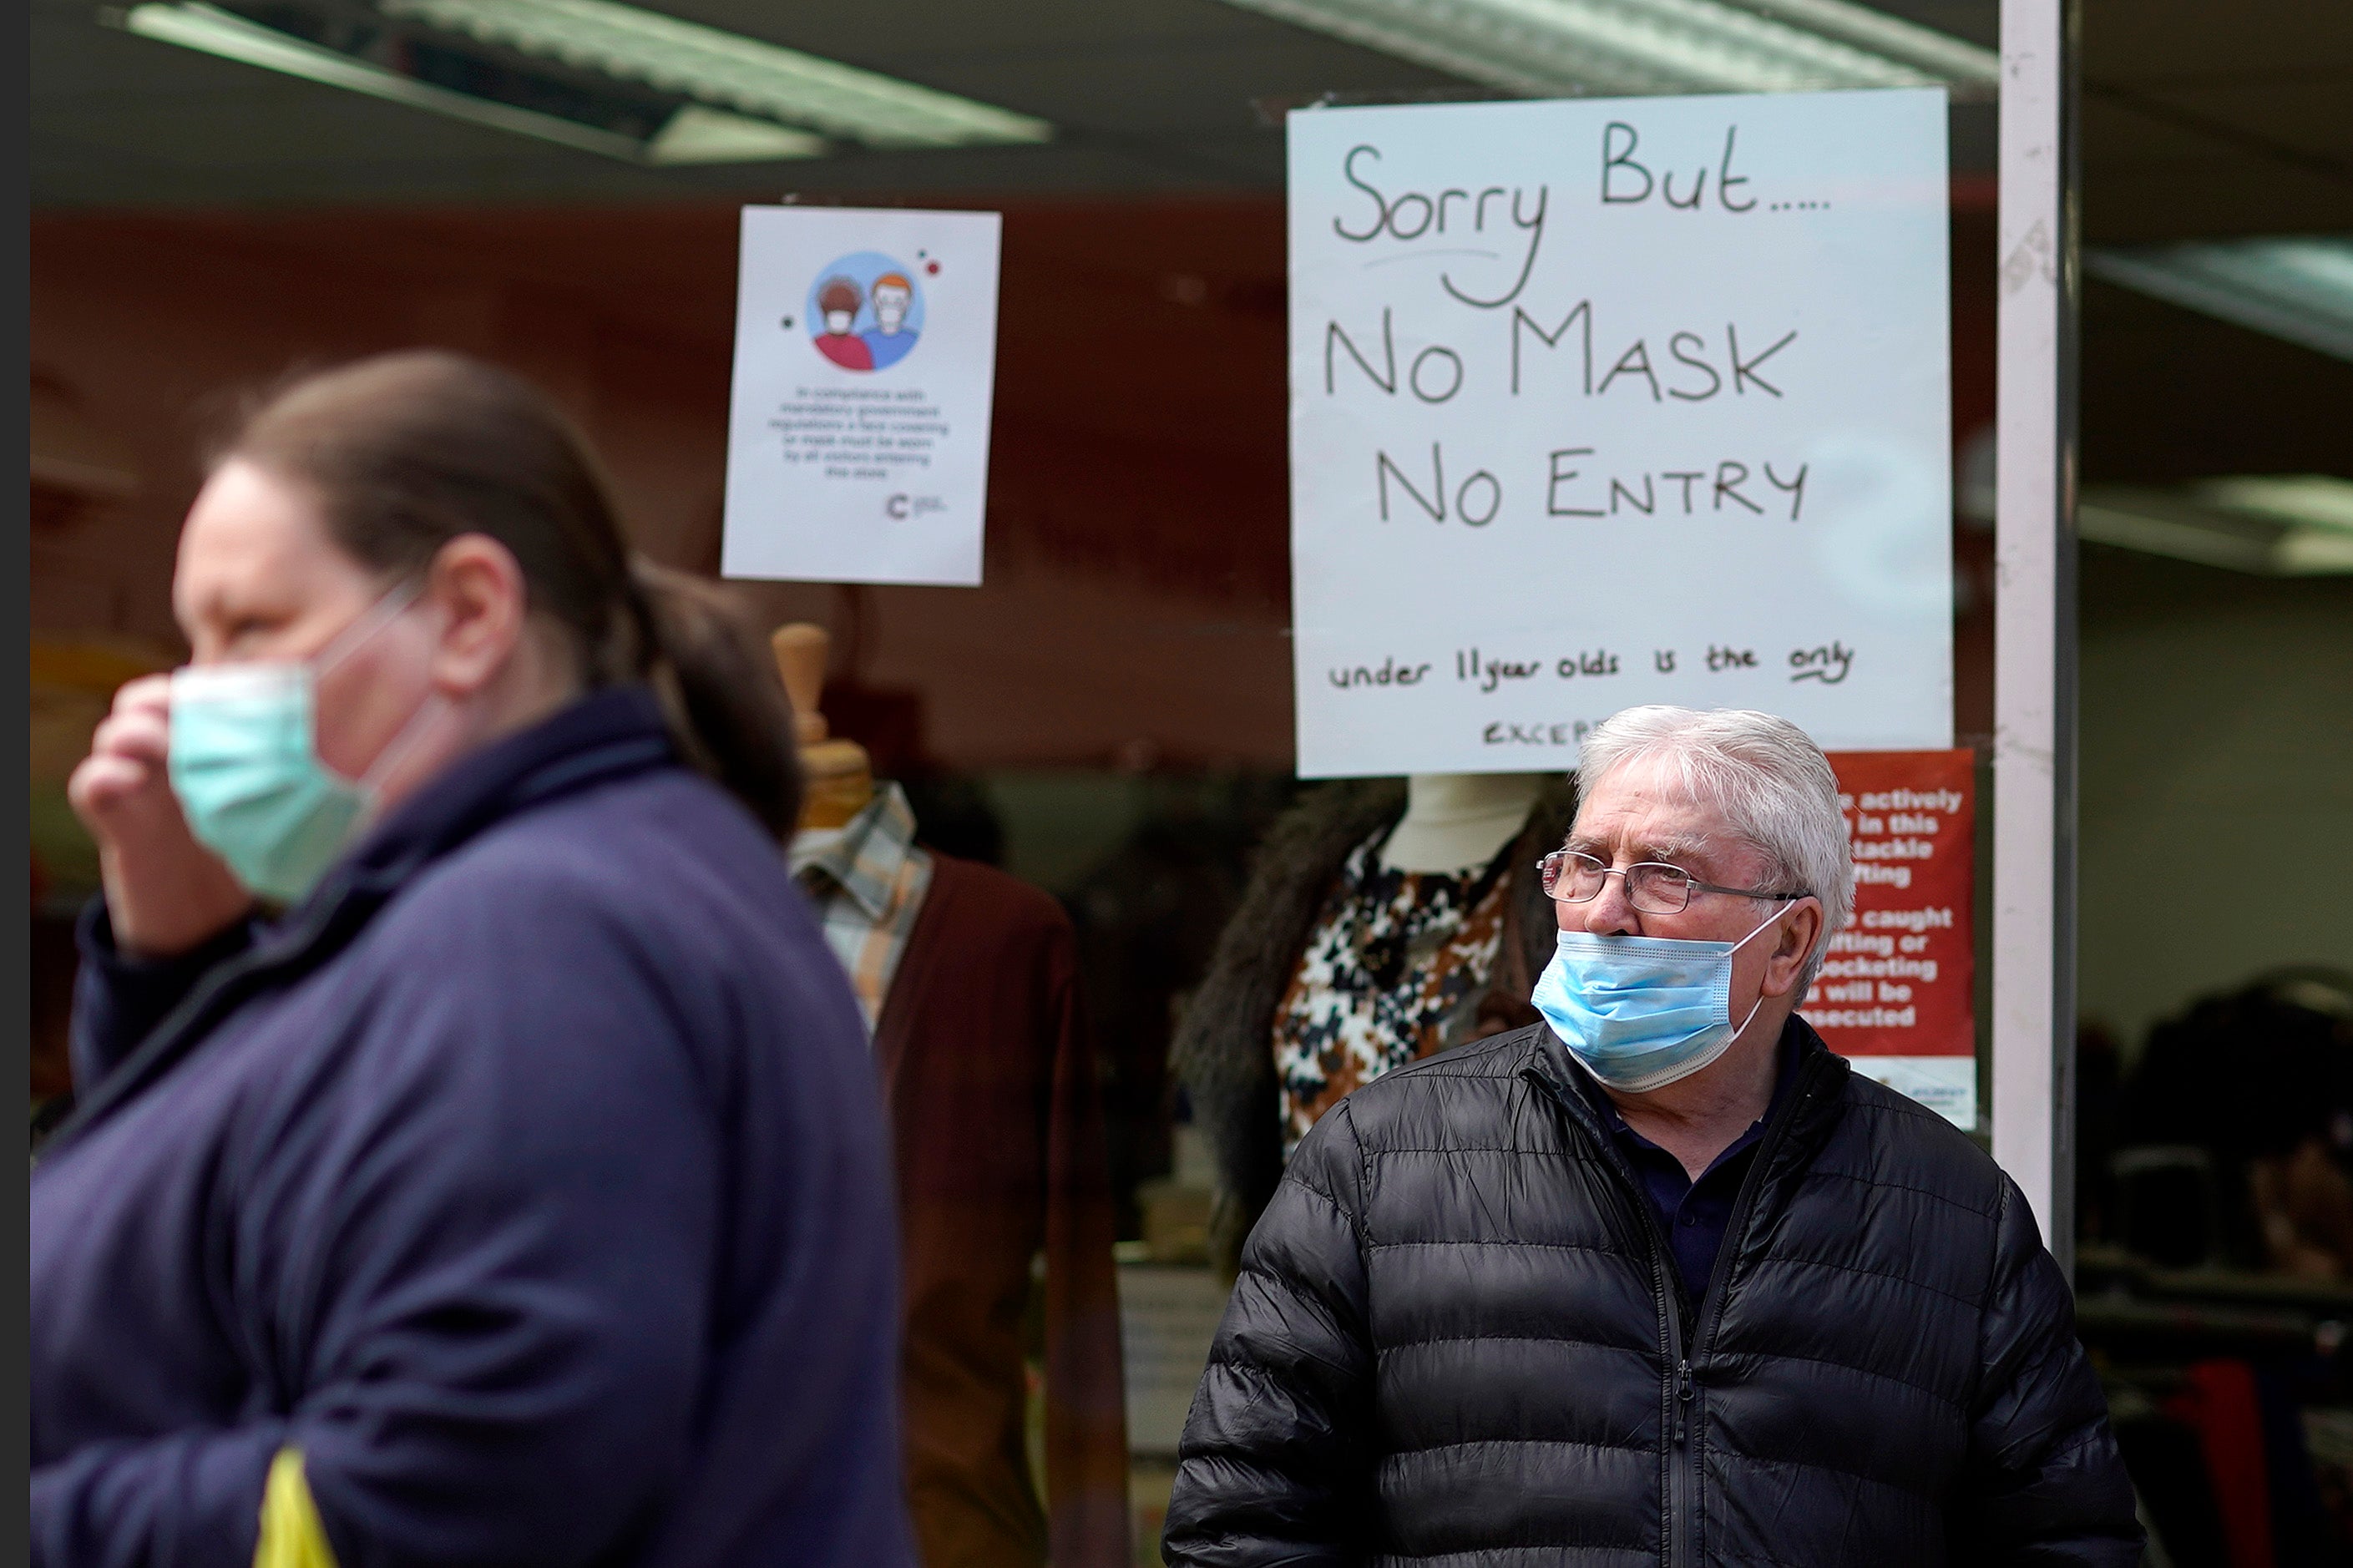 Shoppers wear face masks in Blackburn town centre on July 24, 2020 in Blackburn, England. Blackburn with Darwen has seen a rise in coronavirus cases.